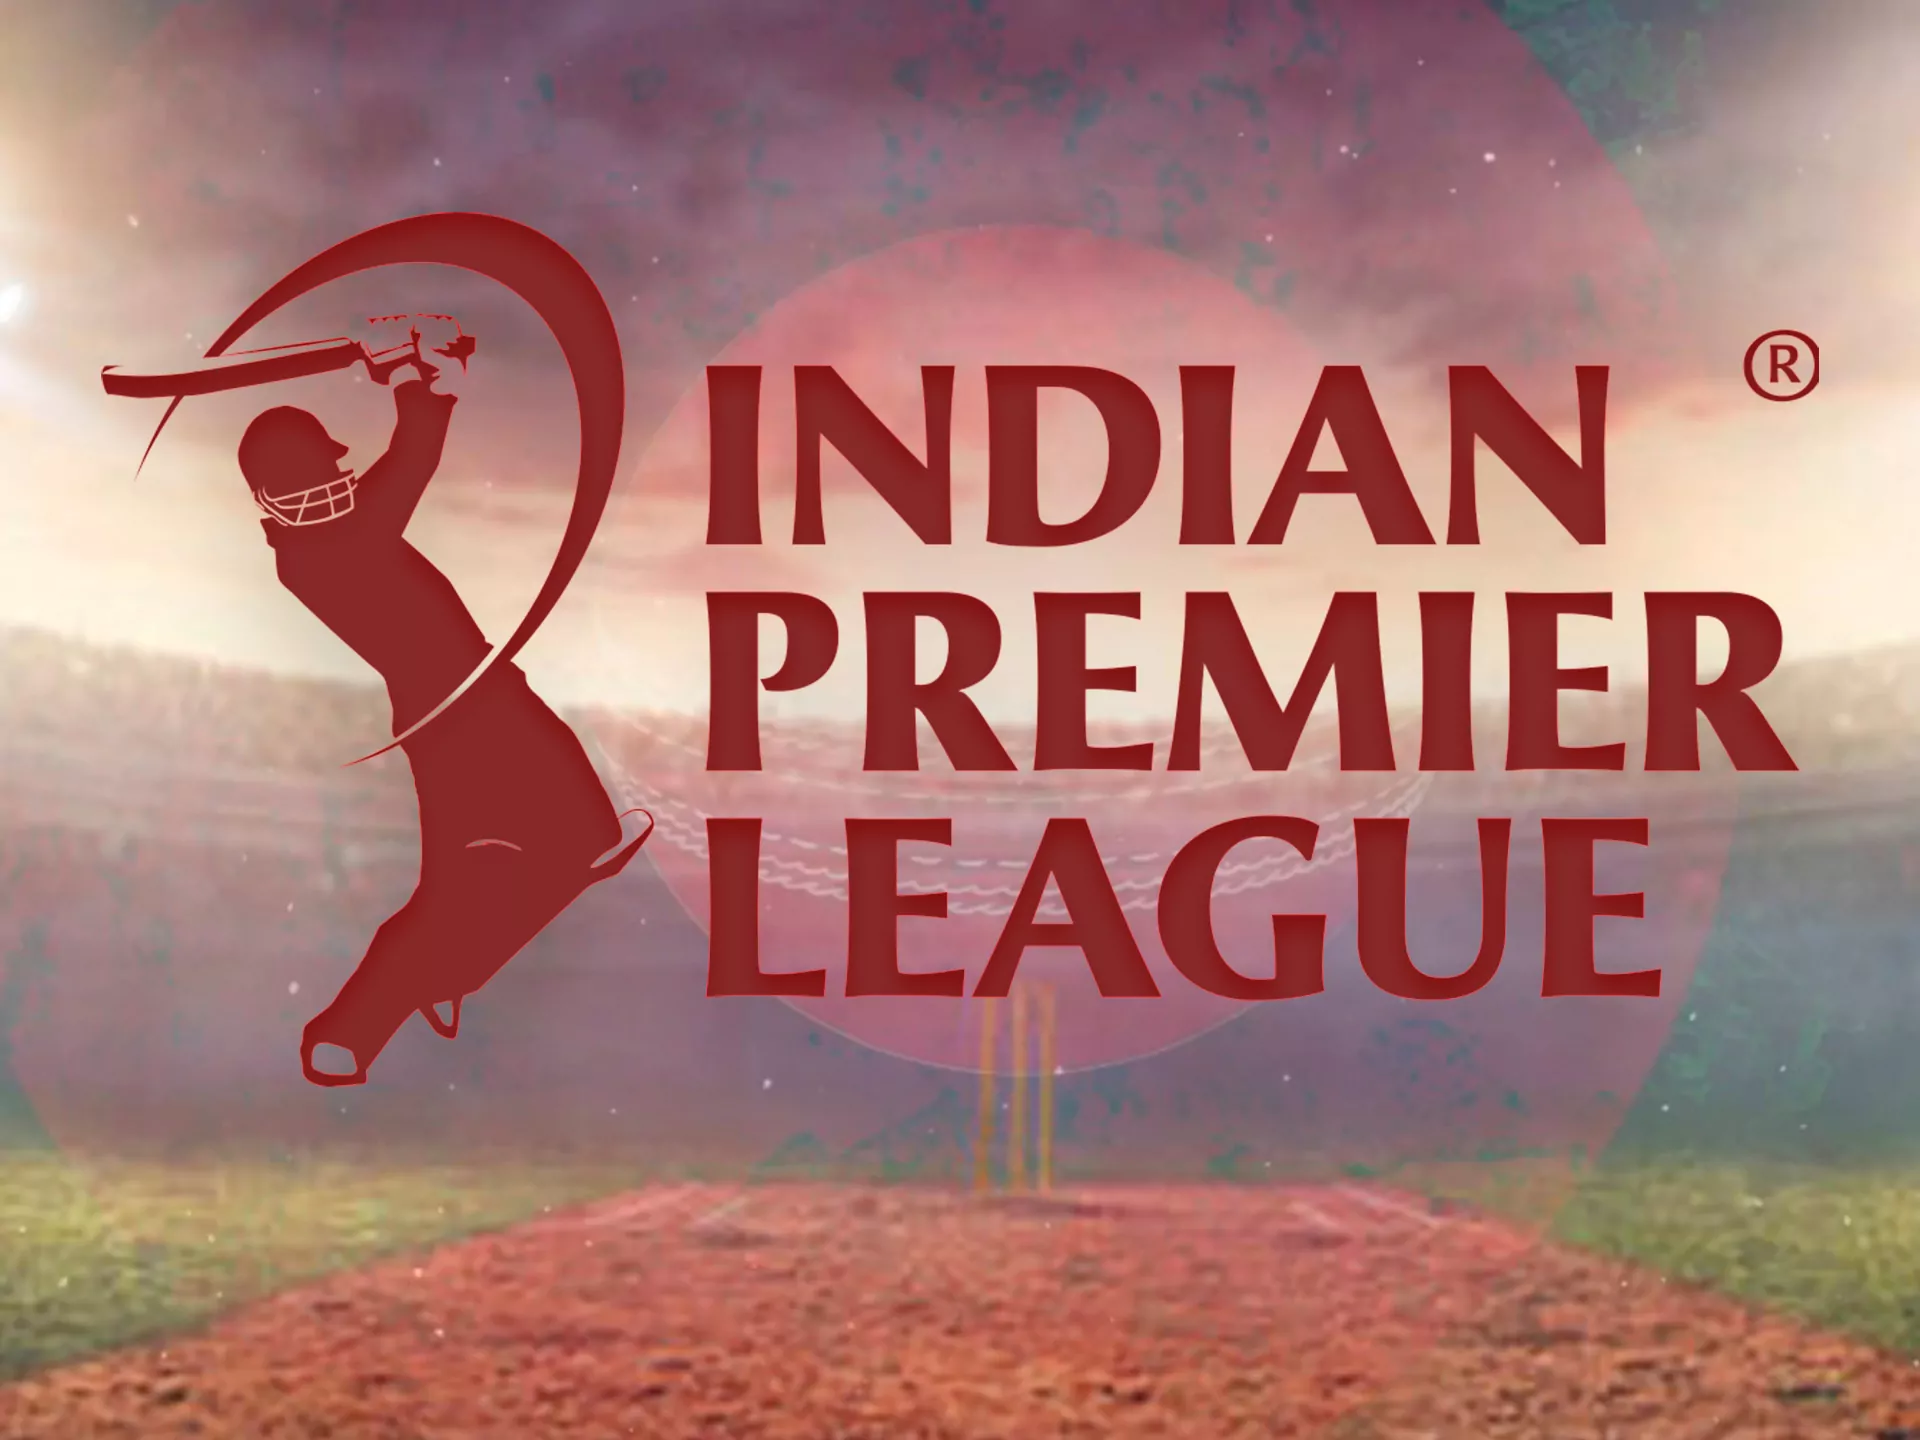 Indian Premier League - India's premier sporting event